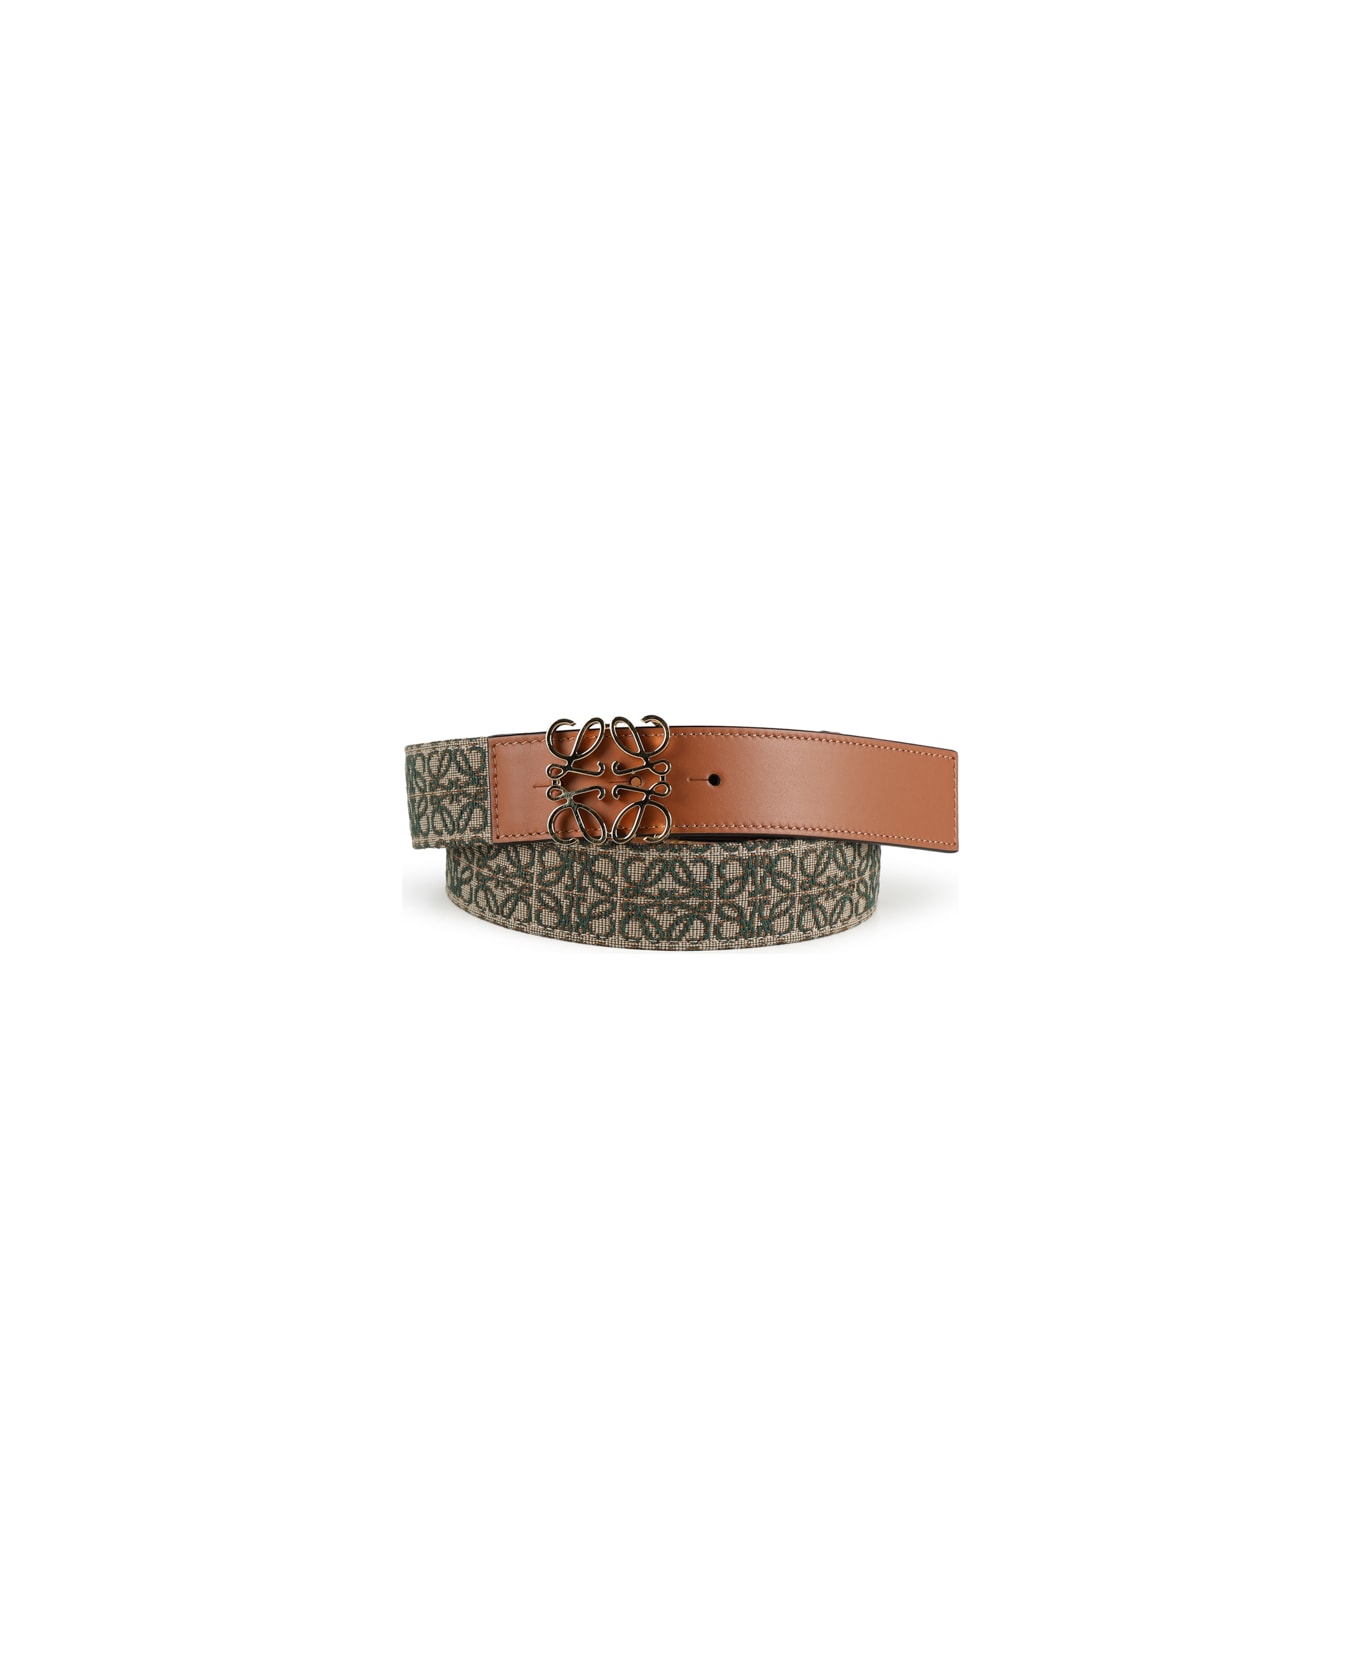 Loewe Anagram Belt In Leather And Jacquard - Khaki green/tan/gold